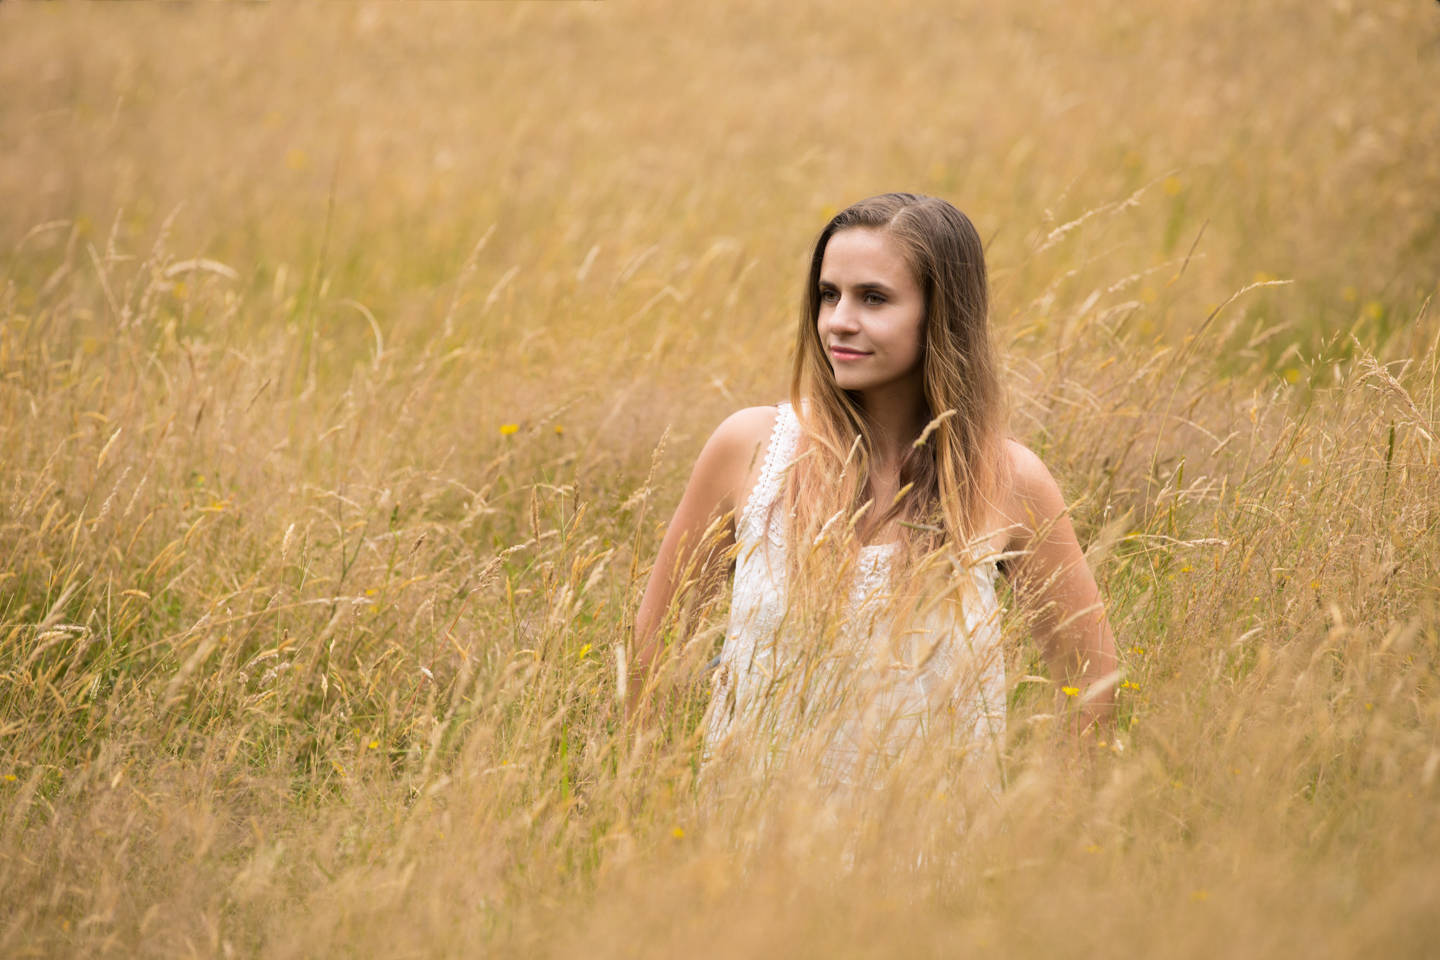 Rachel in the long grass